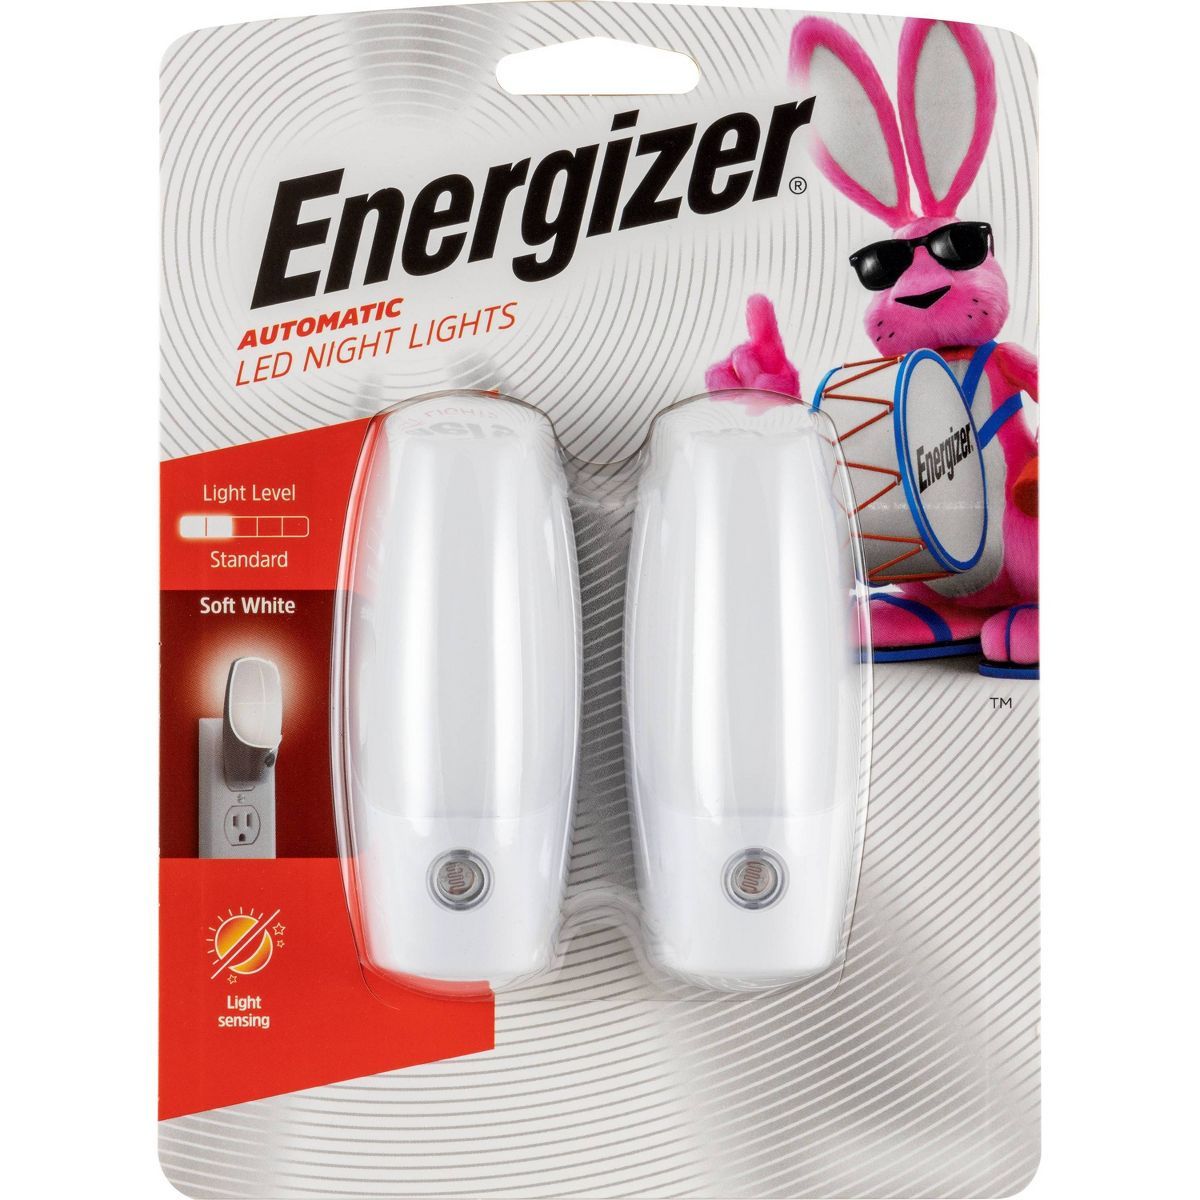 Energizer 2pk LED Automatic Plug In Nightlights | Target